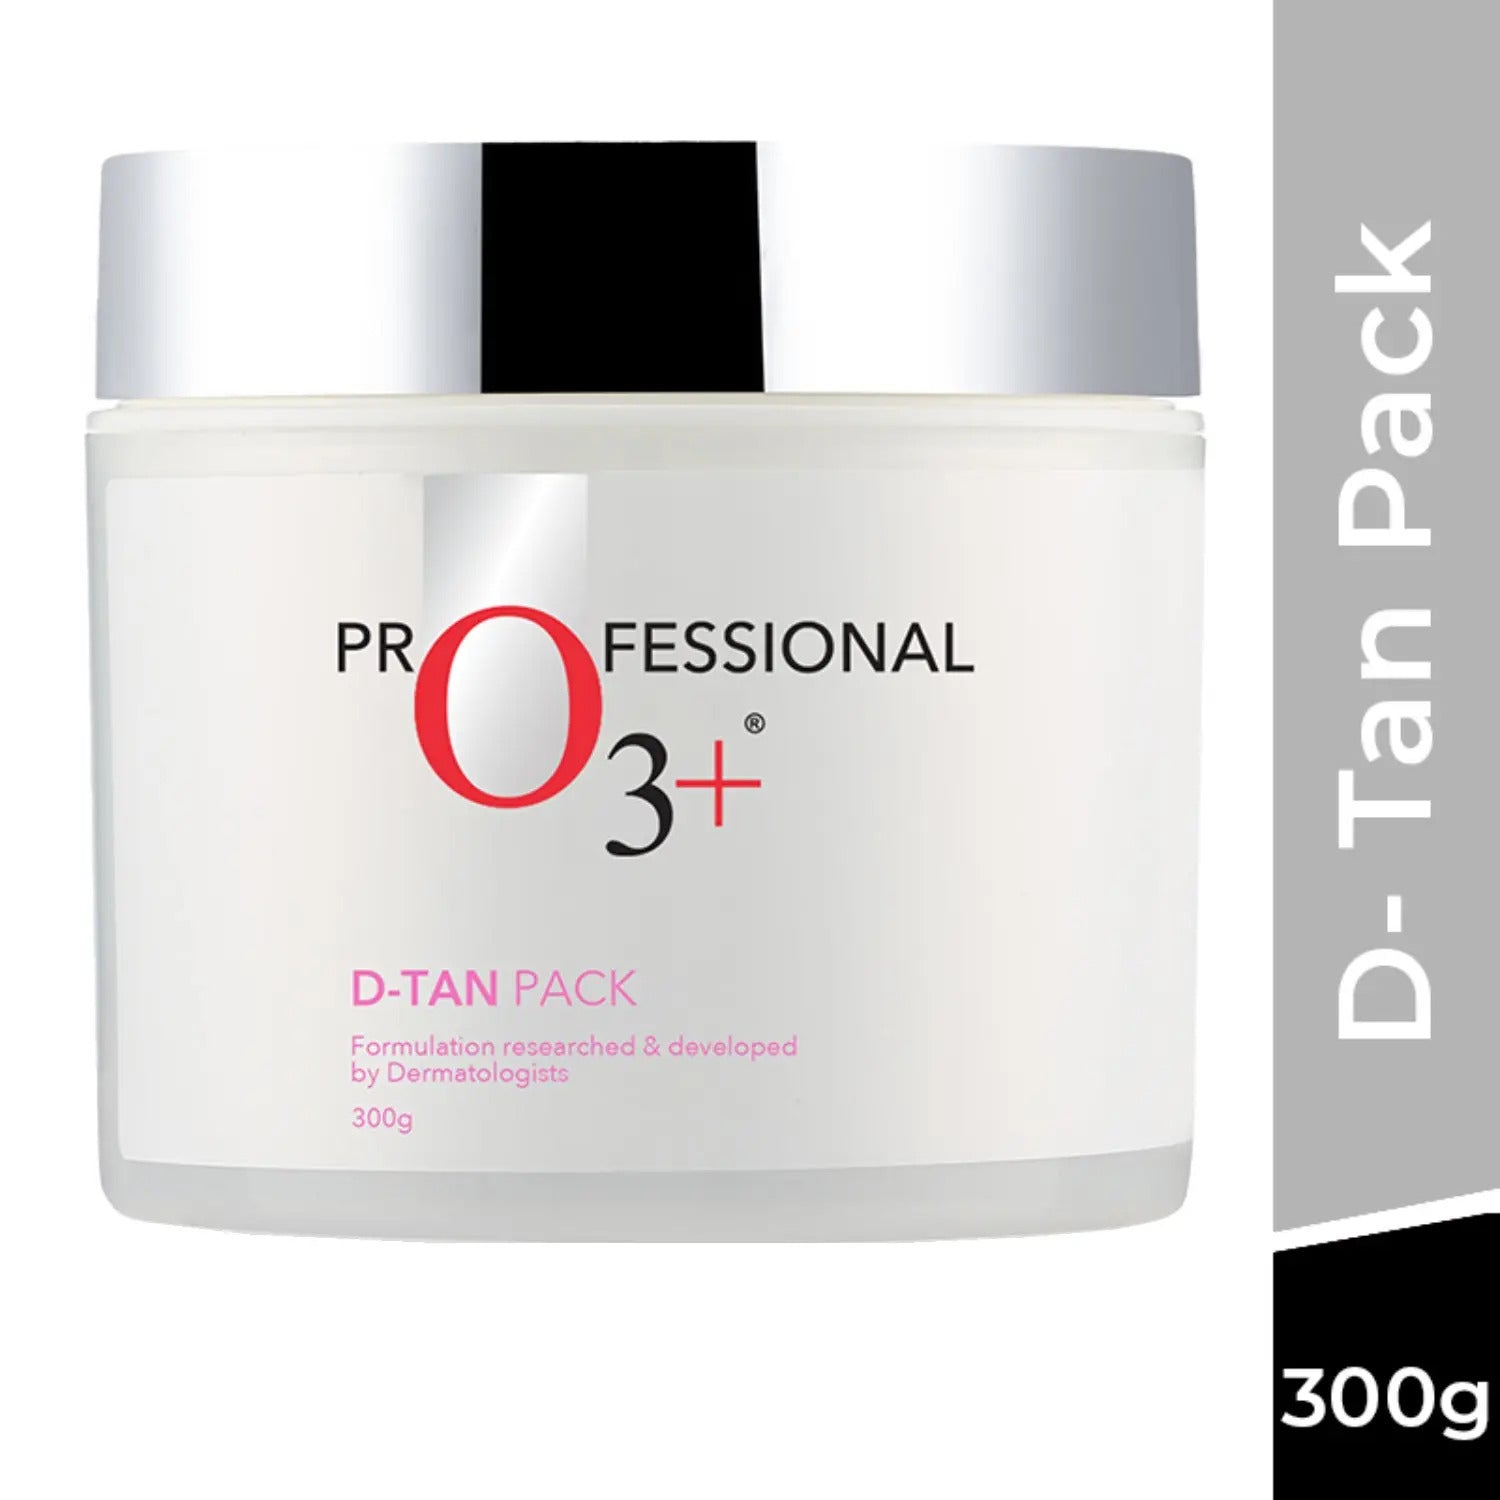 O3+ Dtan Pack - Buy DTan pack Online in India at low Price